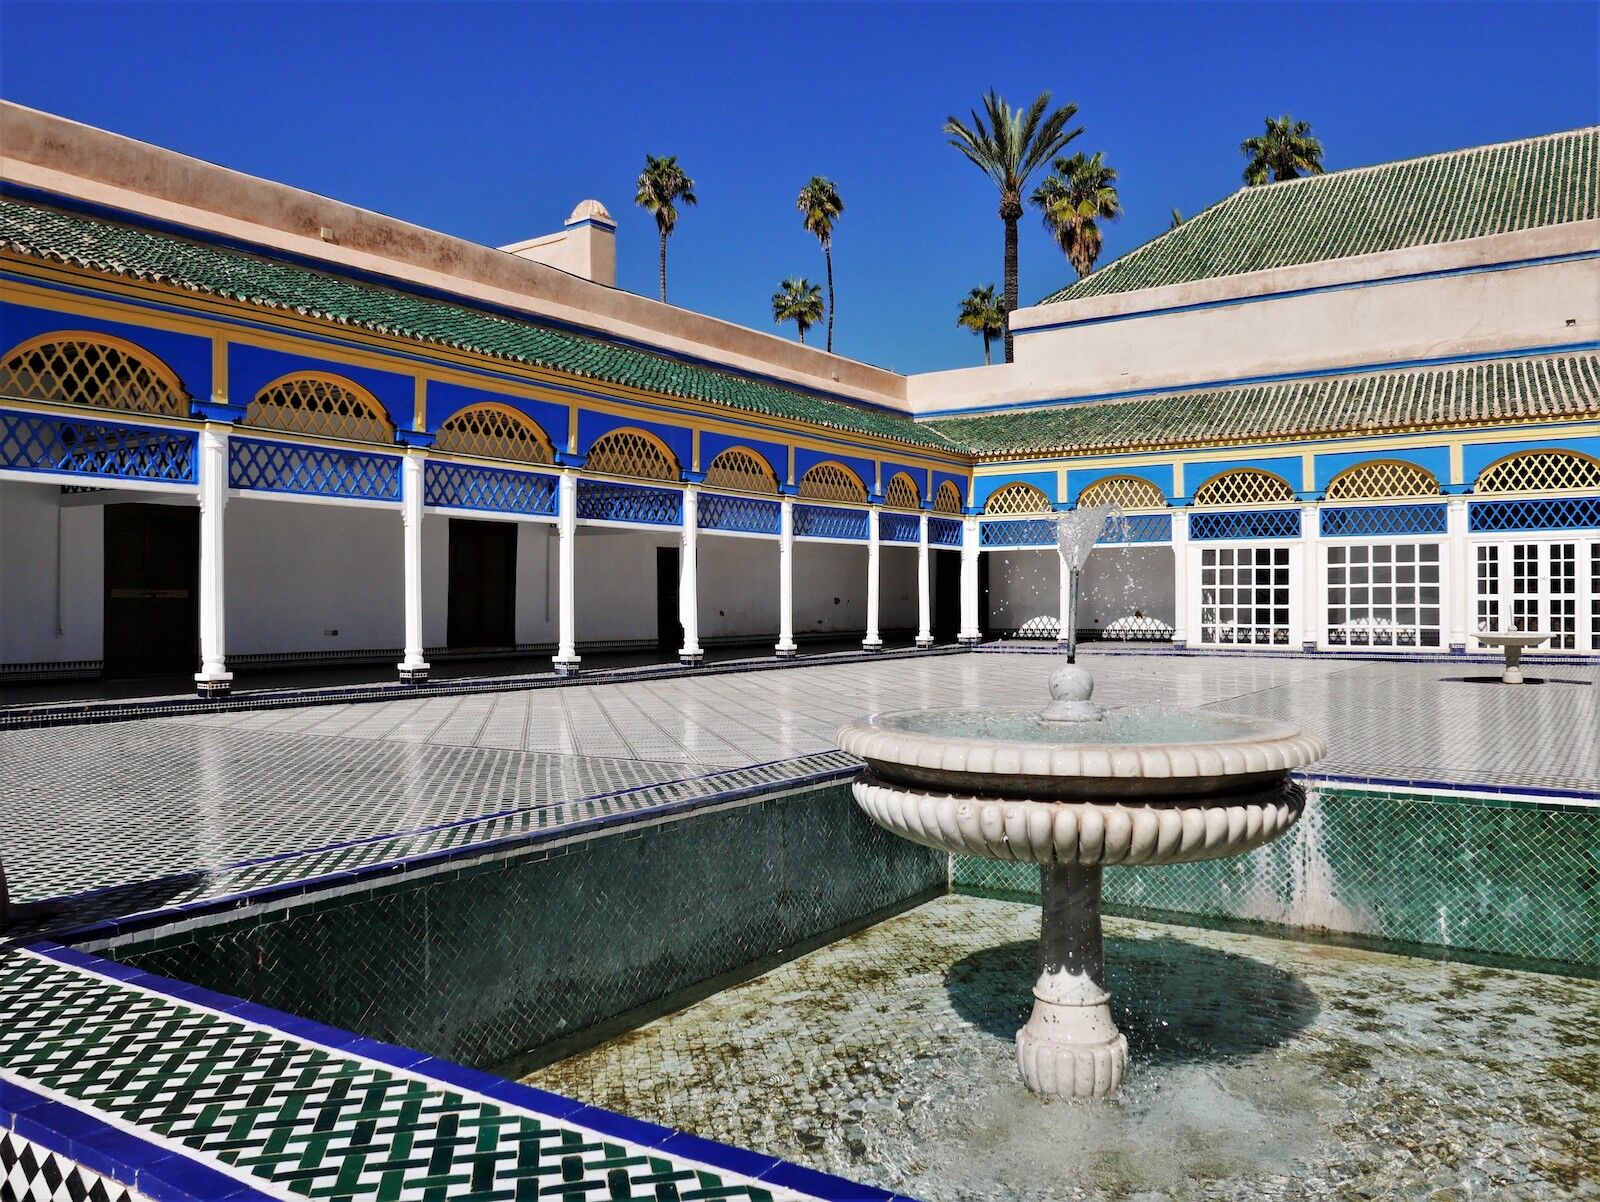 Fountain in Bahia Palace, Morocco